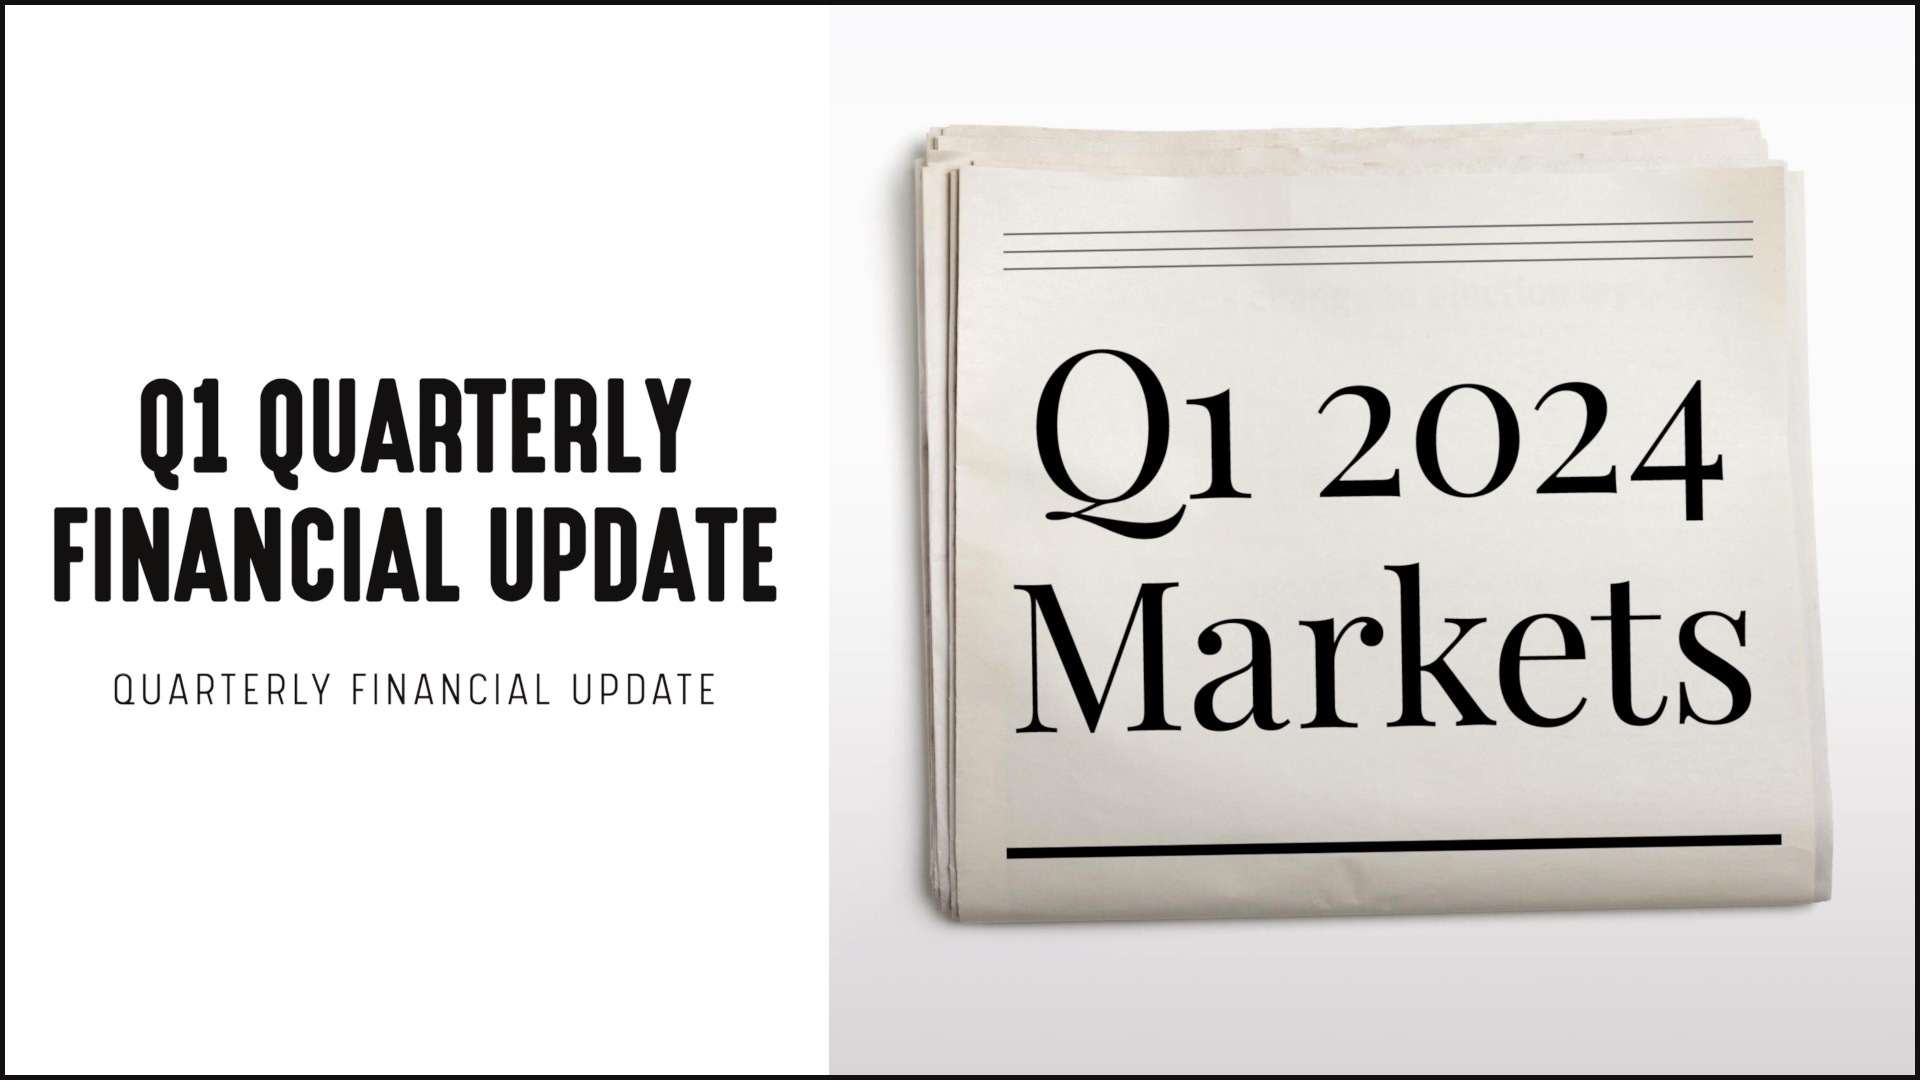 [NEW] Q1 2024 Quarterly Financial Update